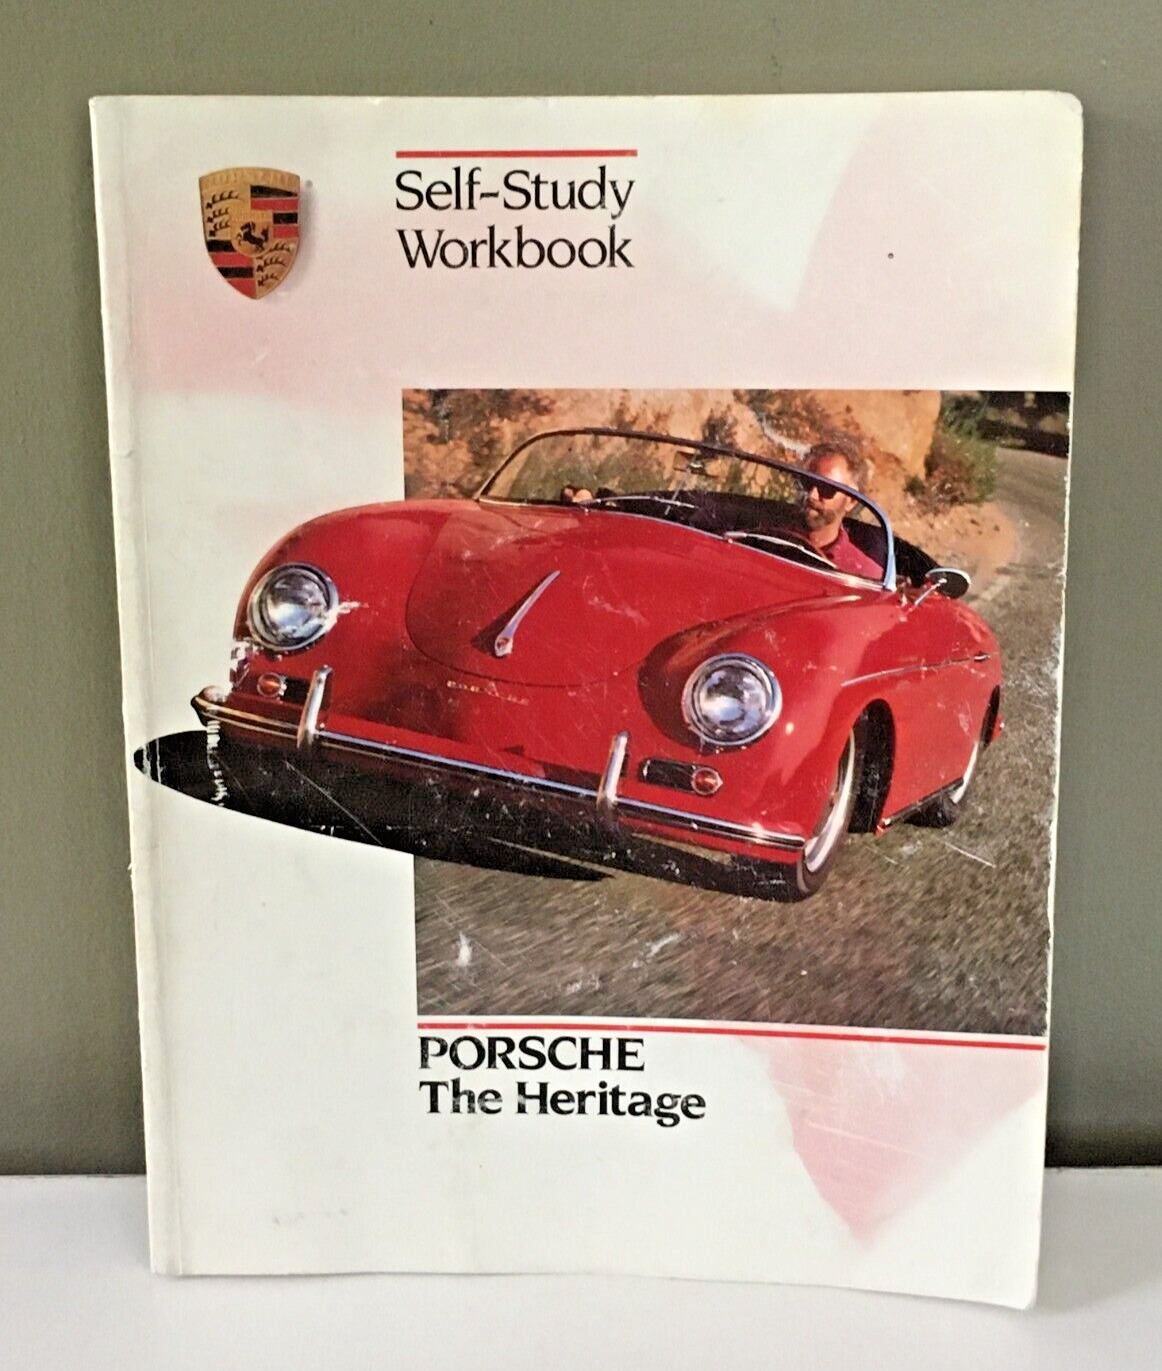 Vintage 1987 Porsche Self-Study Product Knowledge Workbook